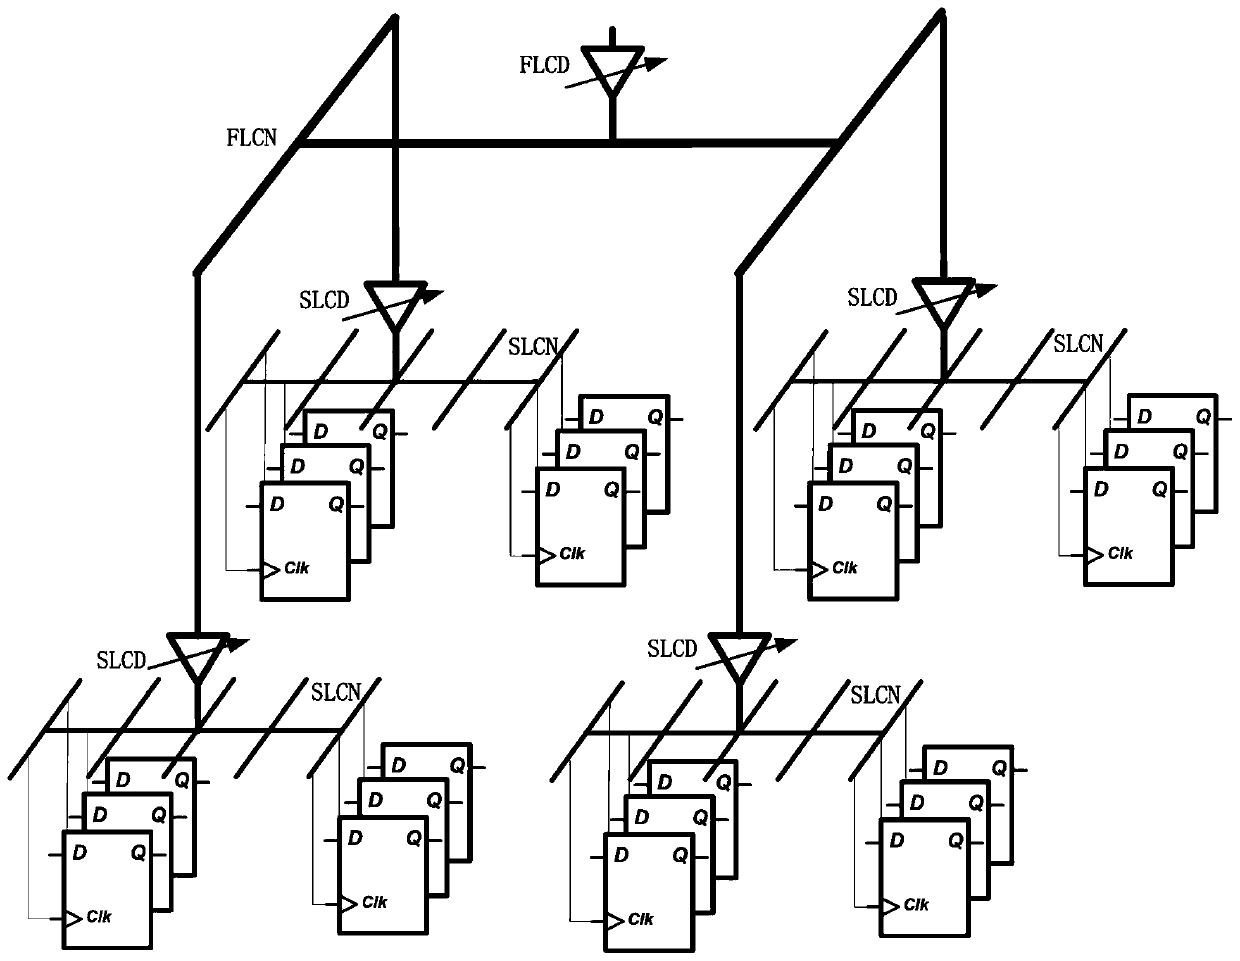 Clock distribution network rapid design method